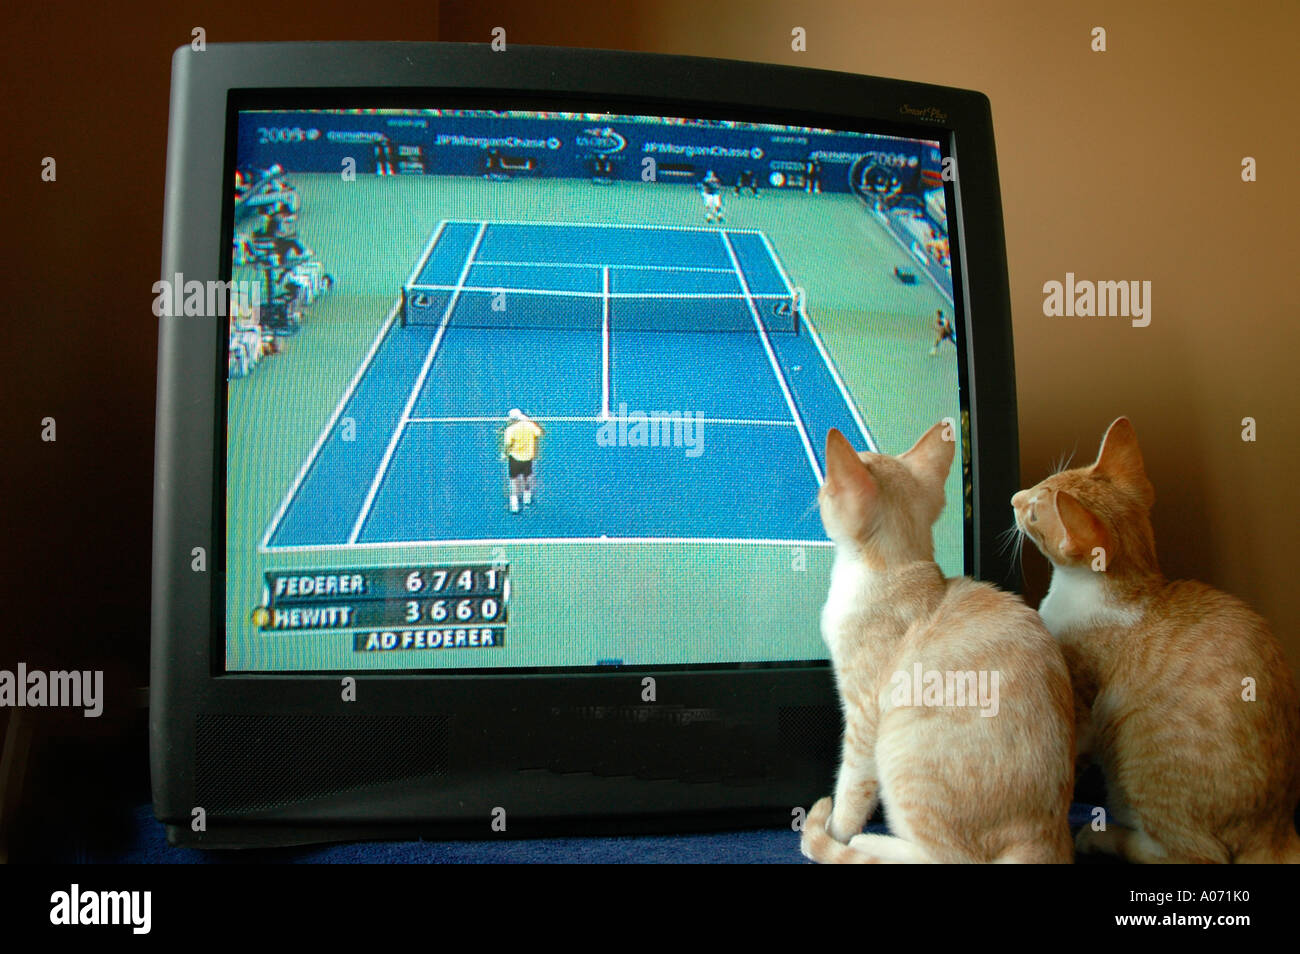 Cats kittens watching tennis match at Wimbledon on Television Stock Photo -  Alamy